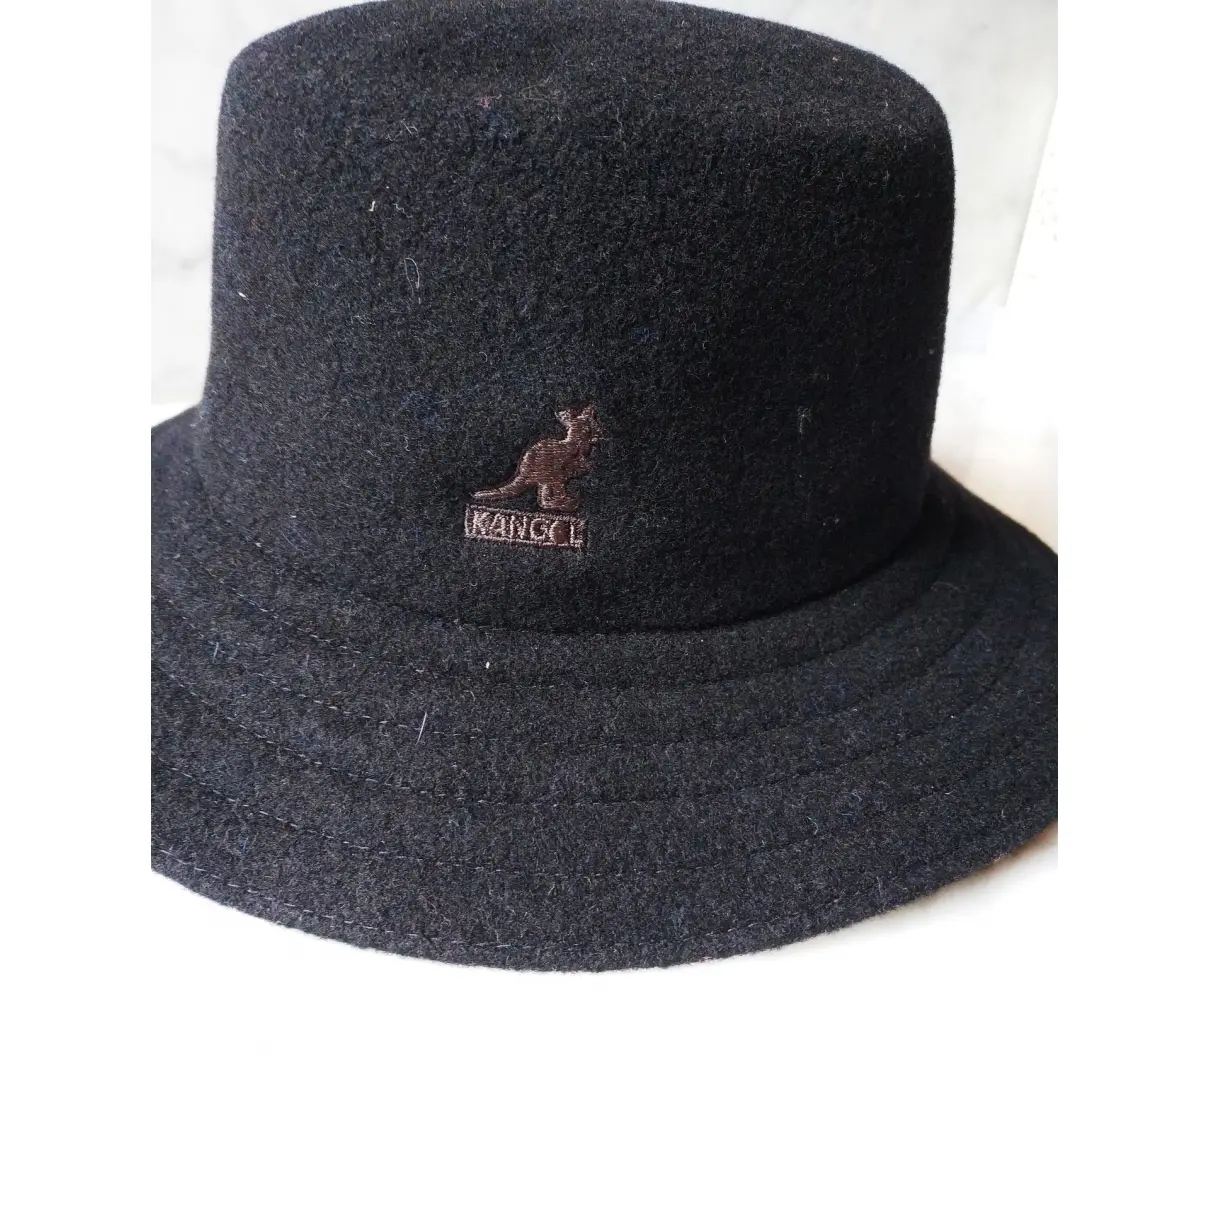 Kangol Wool hat for sale